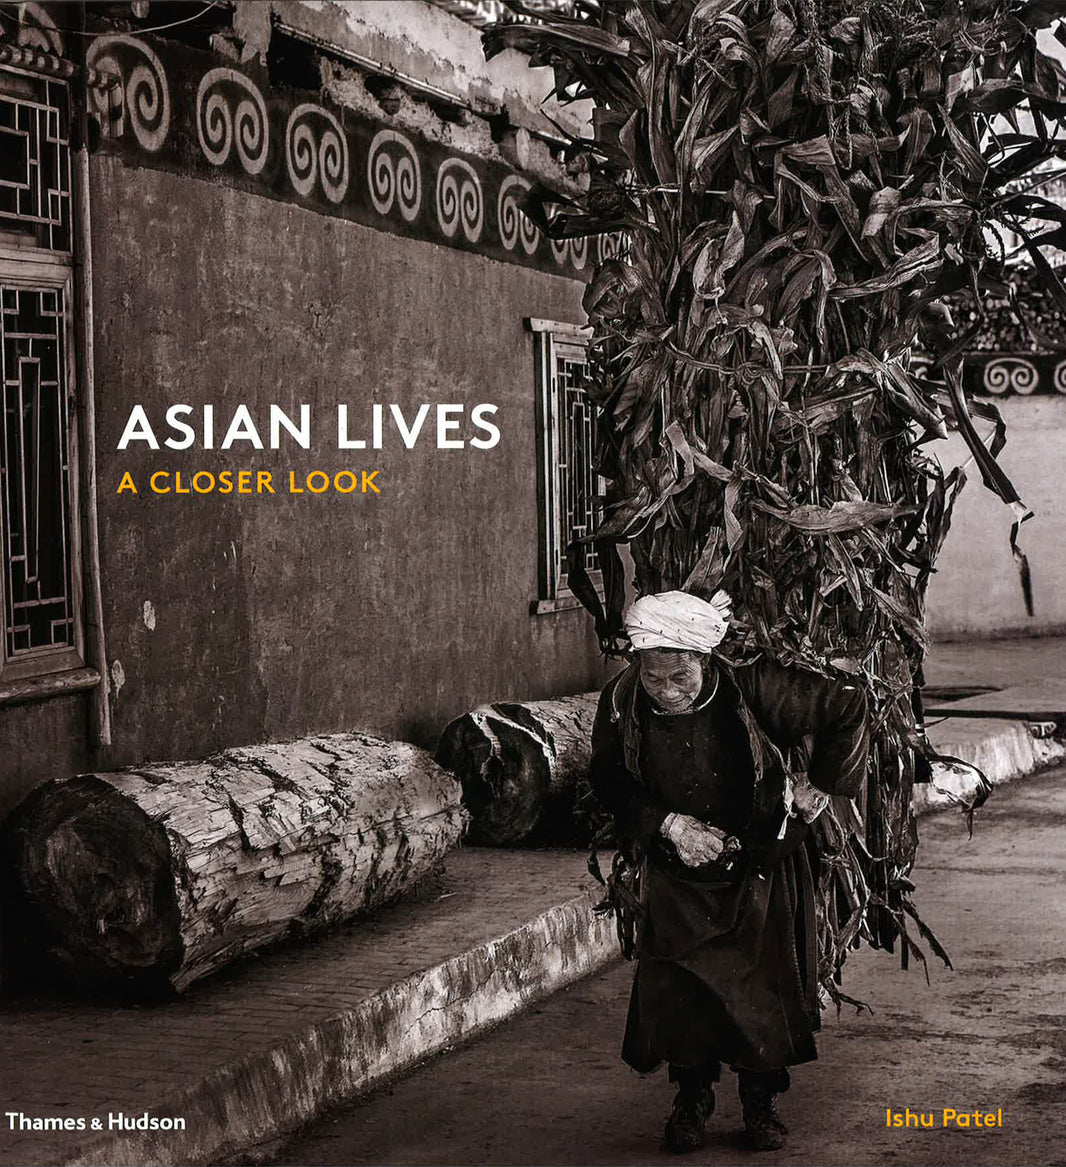 Asia life. Asian Lives a closer look.